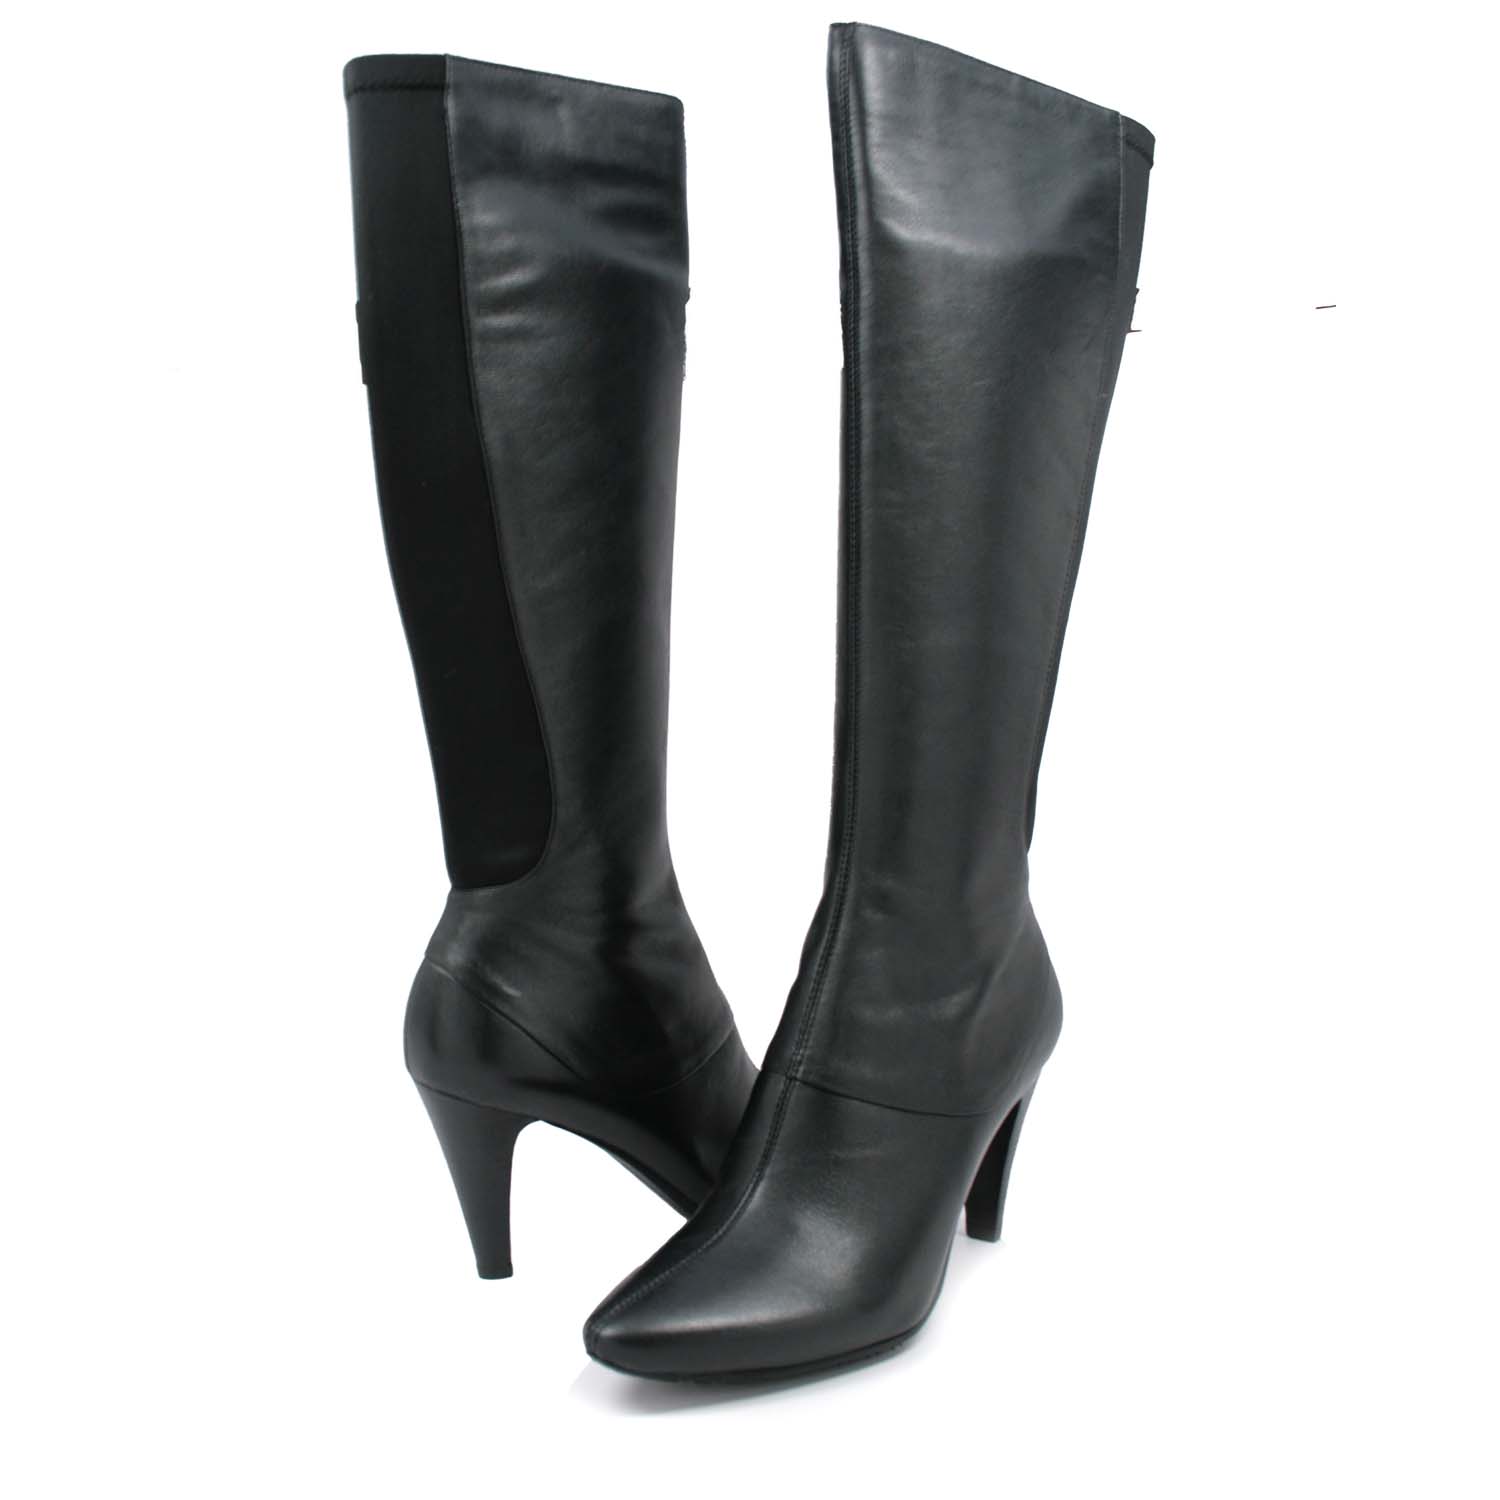 women's rain boots narrow calf